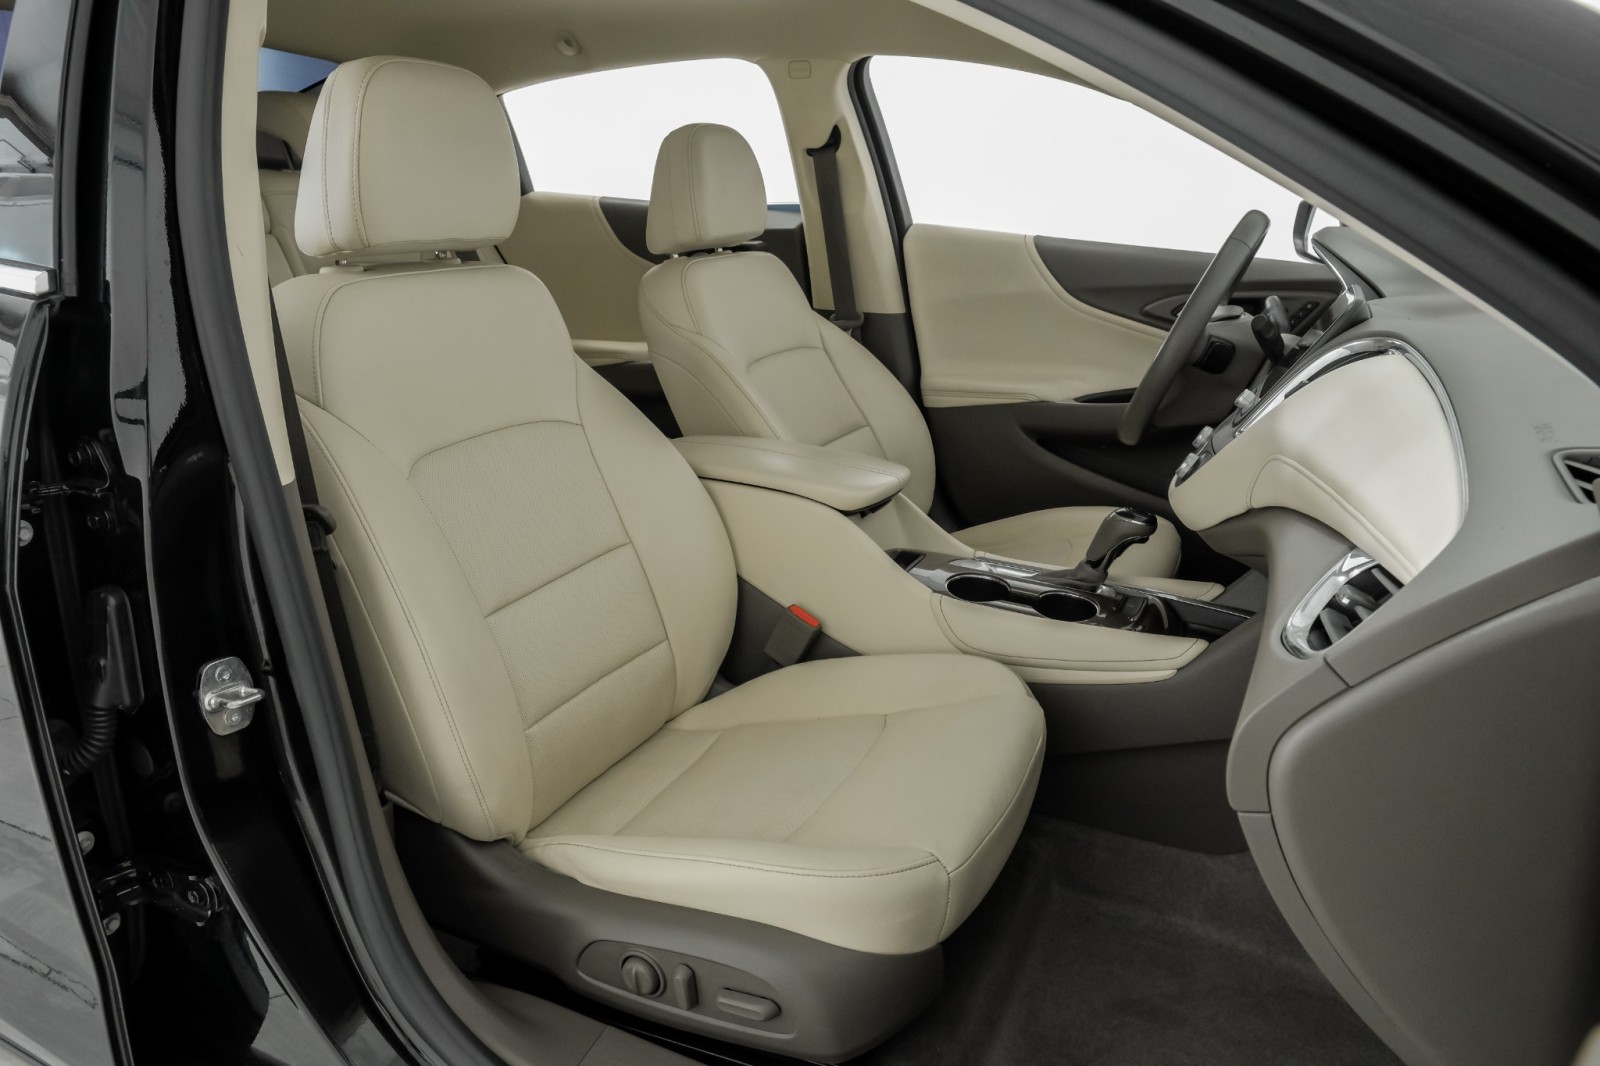 2019 Chevrolet Malibu PREMIER NAVIGATION LEATHER SEATS REAR CAMERA KEYEL 41